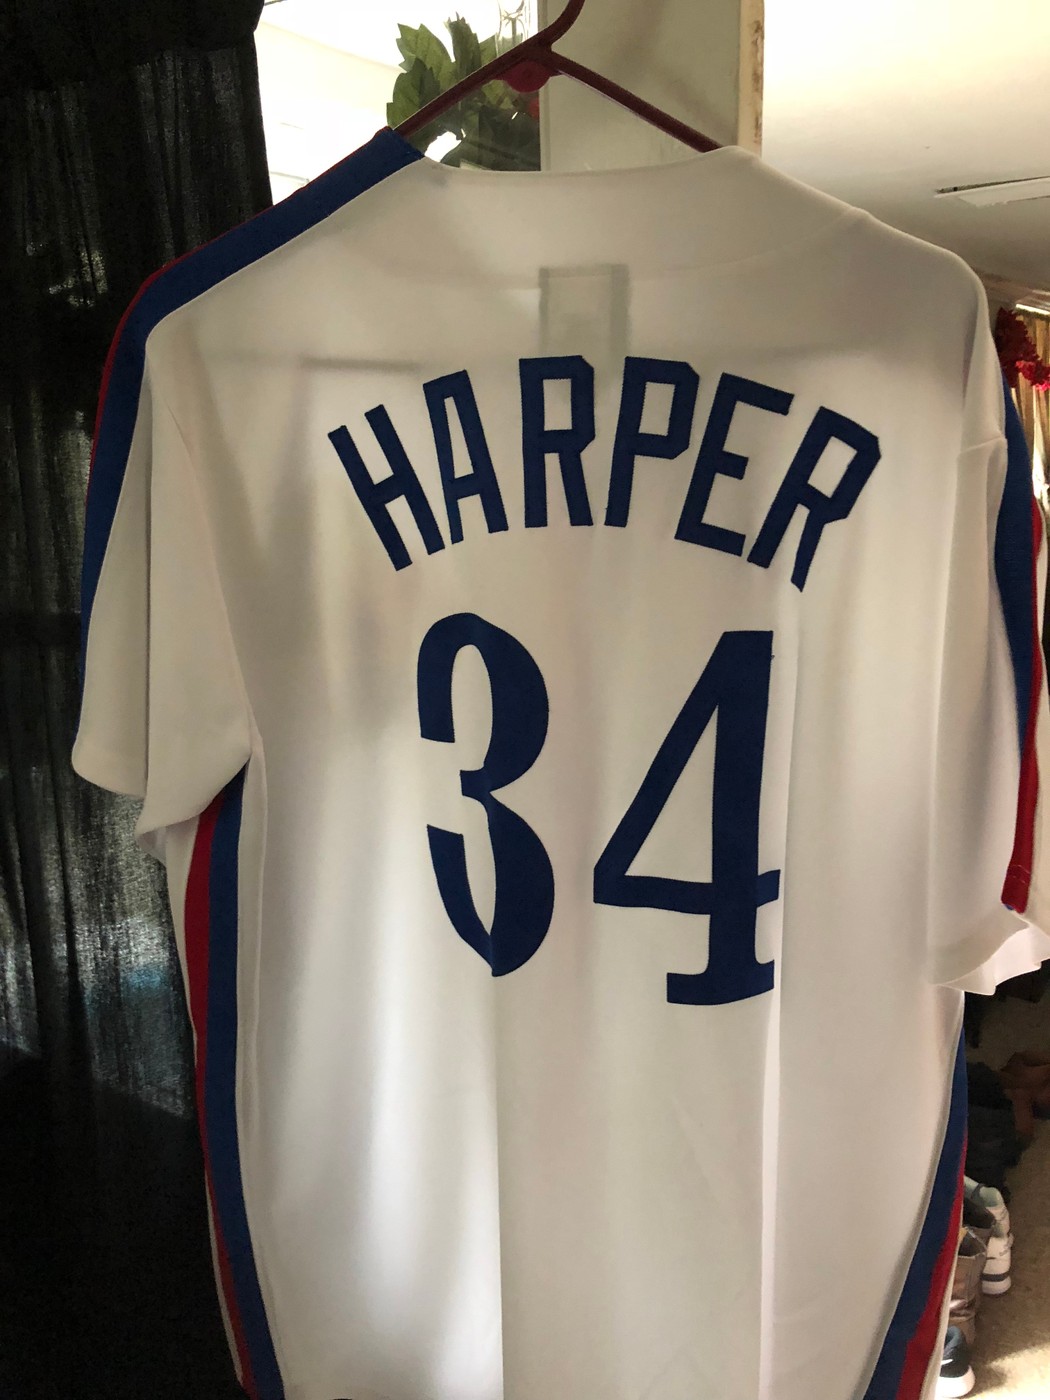 Bryce Harper in a Montreal Expos uniform